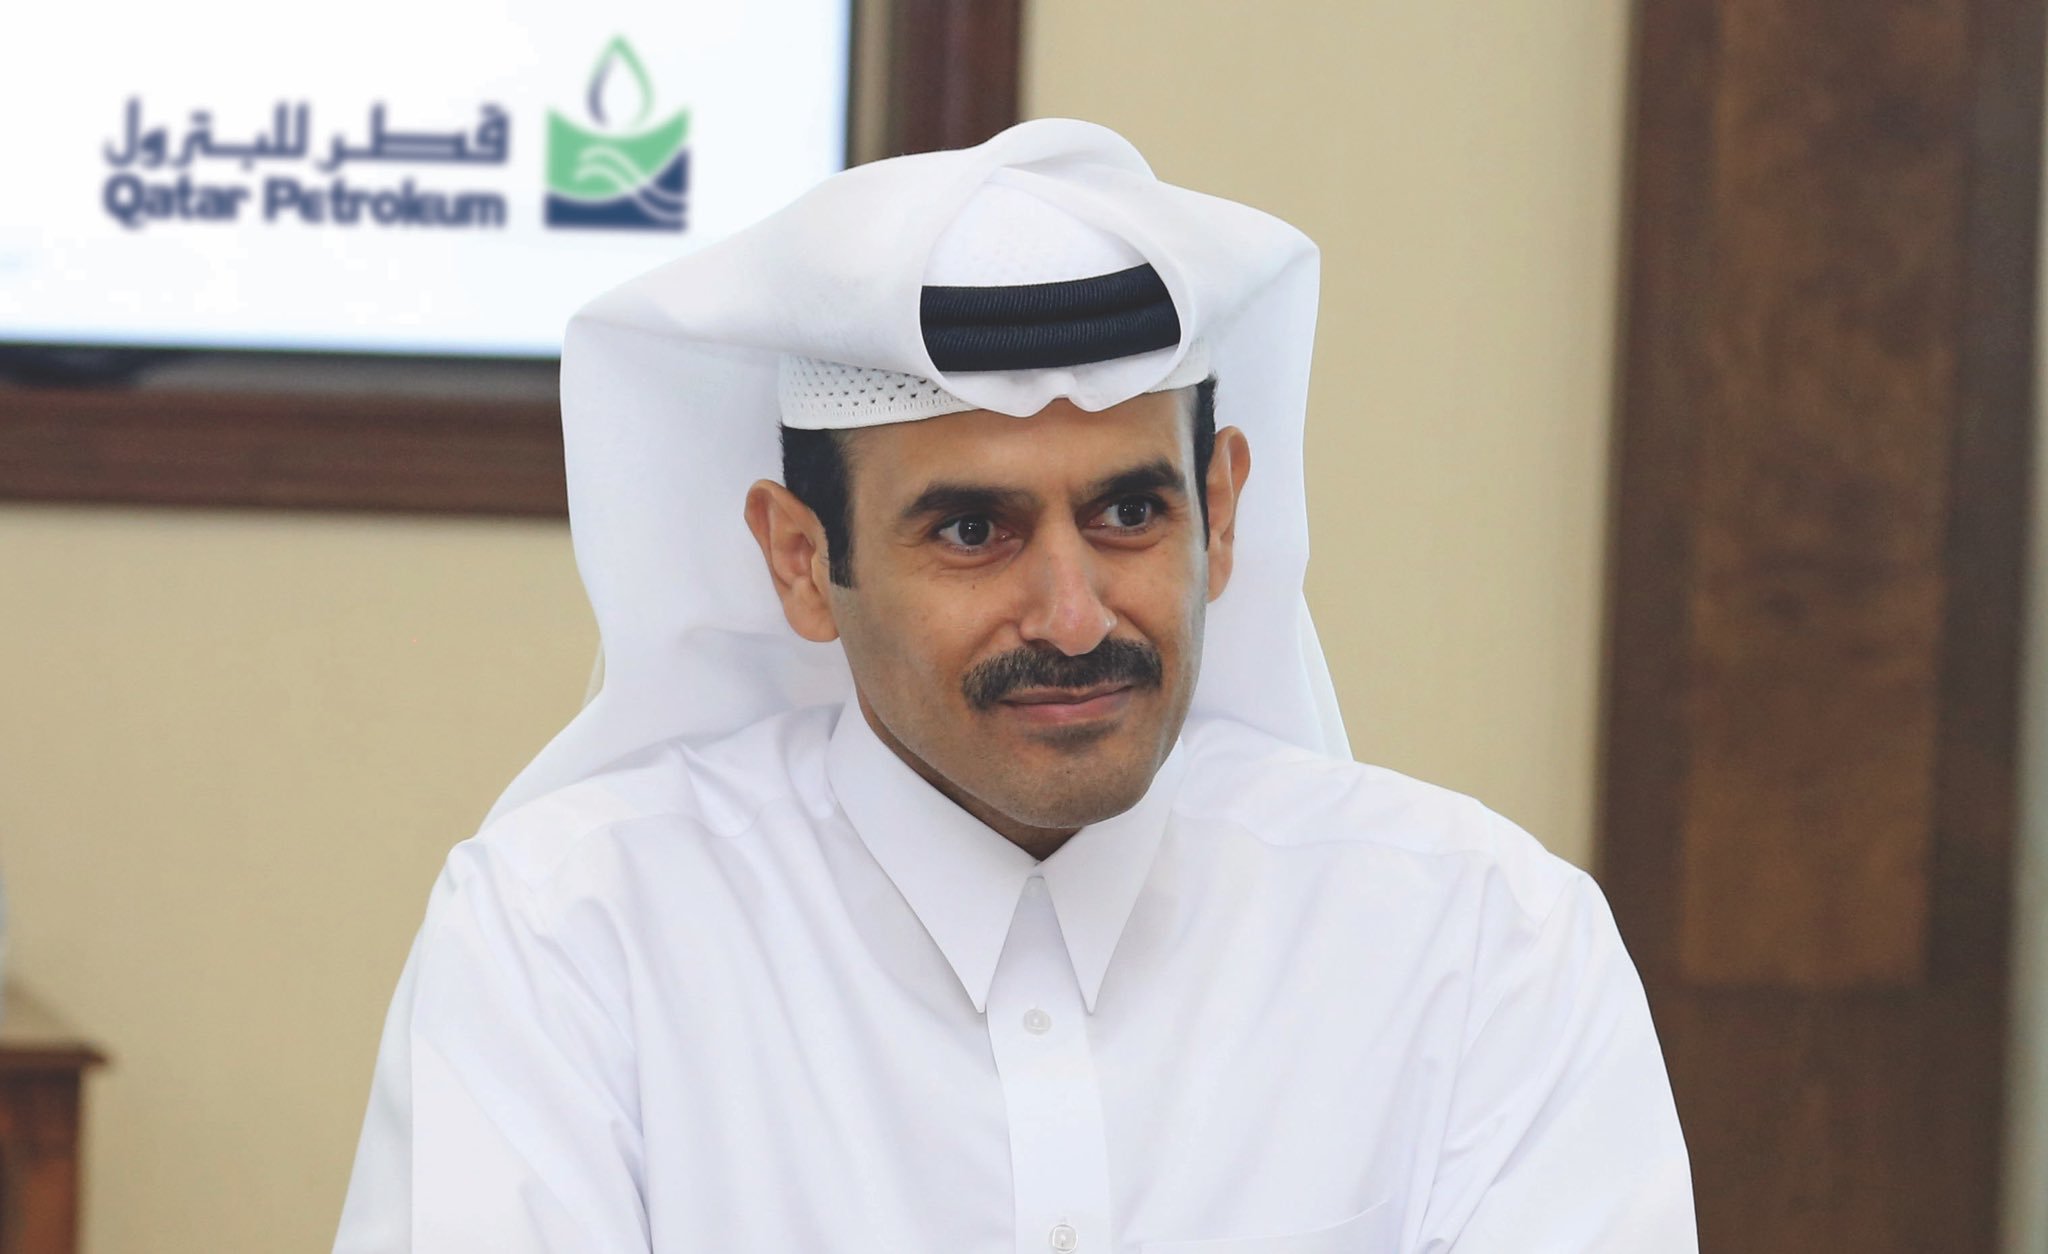 Saad Sherida Al-Kaabi; Source: Qatar Petroleum, now Qatar Energy